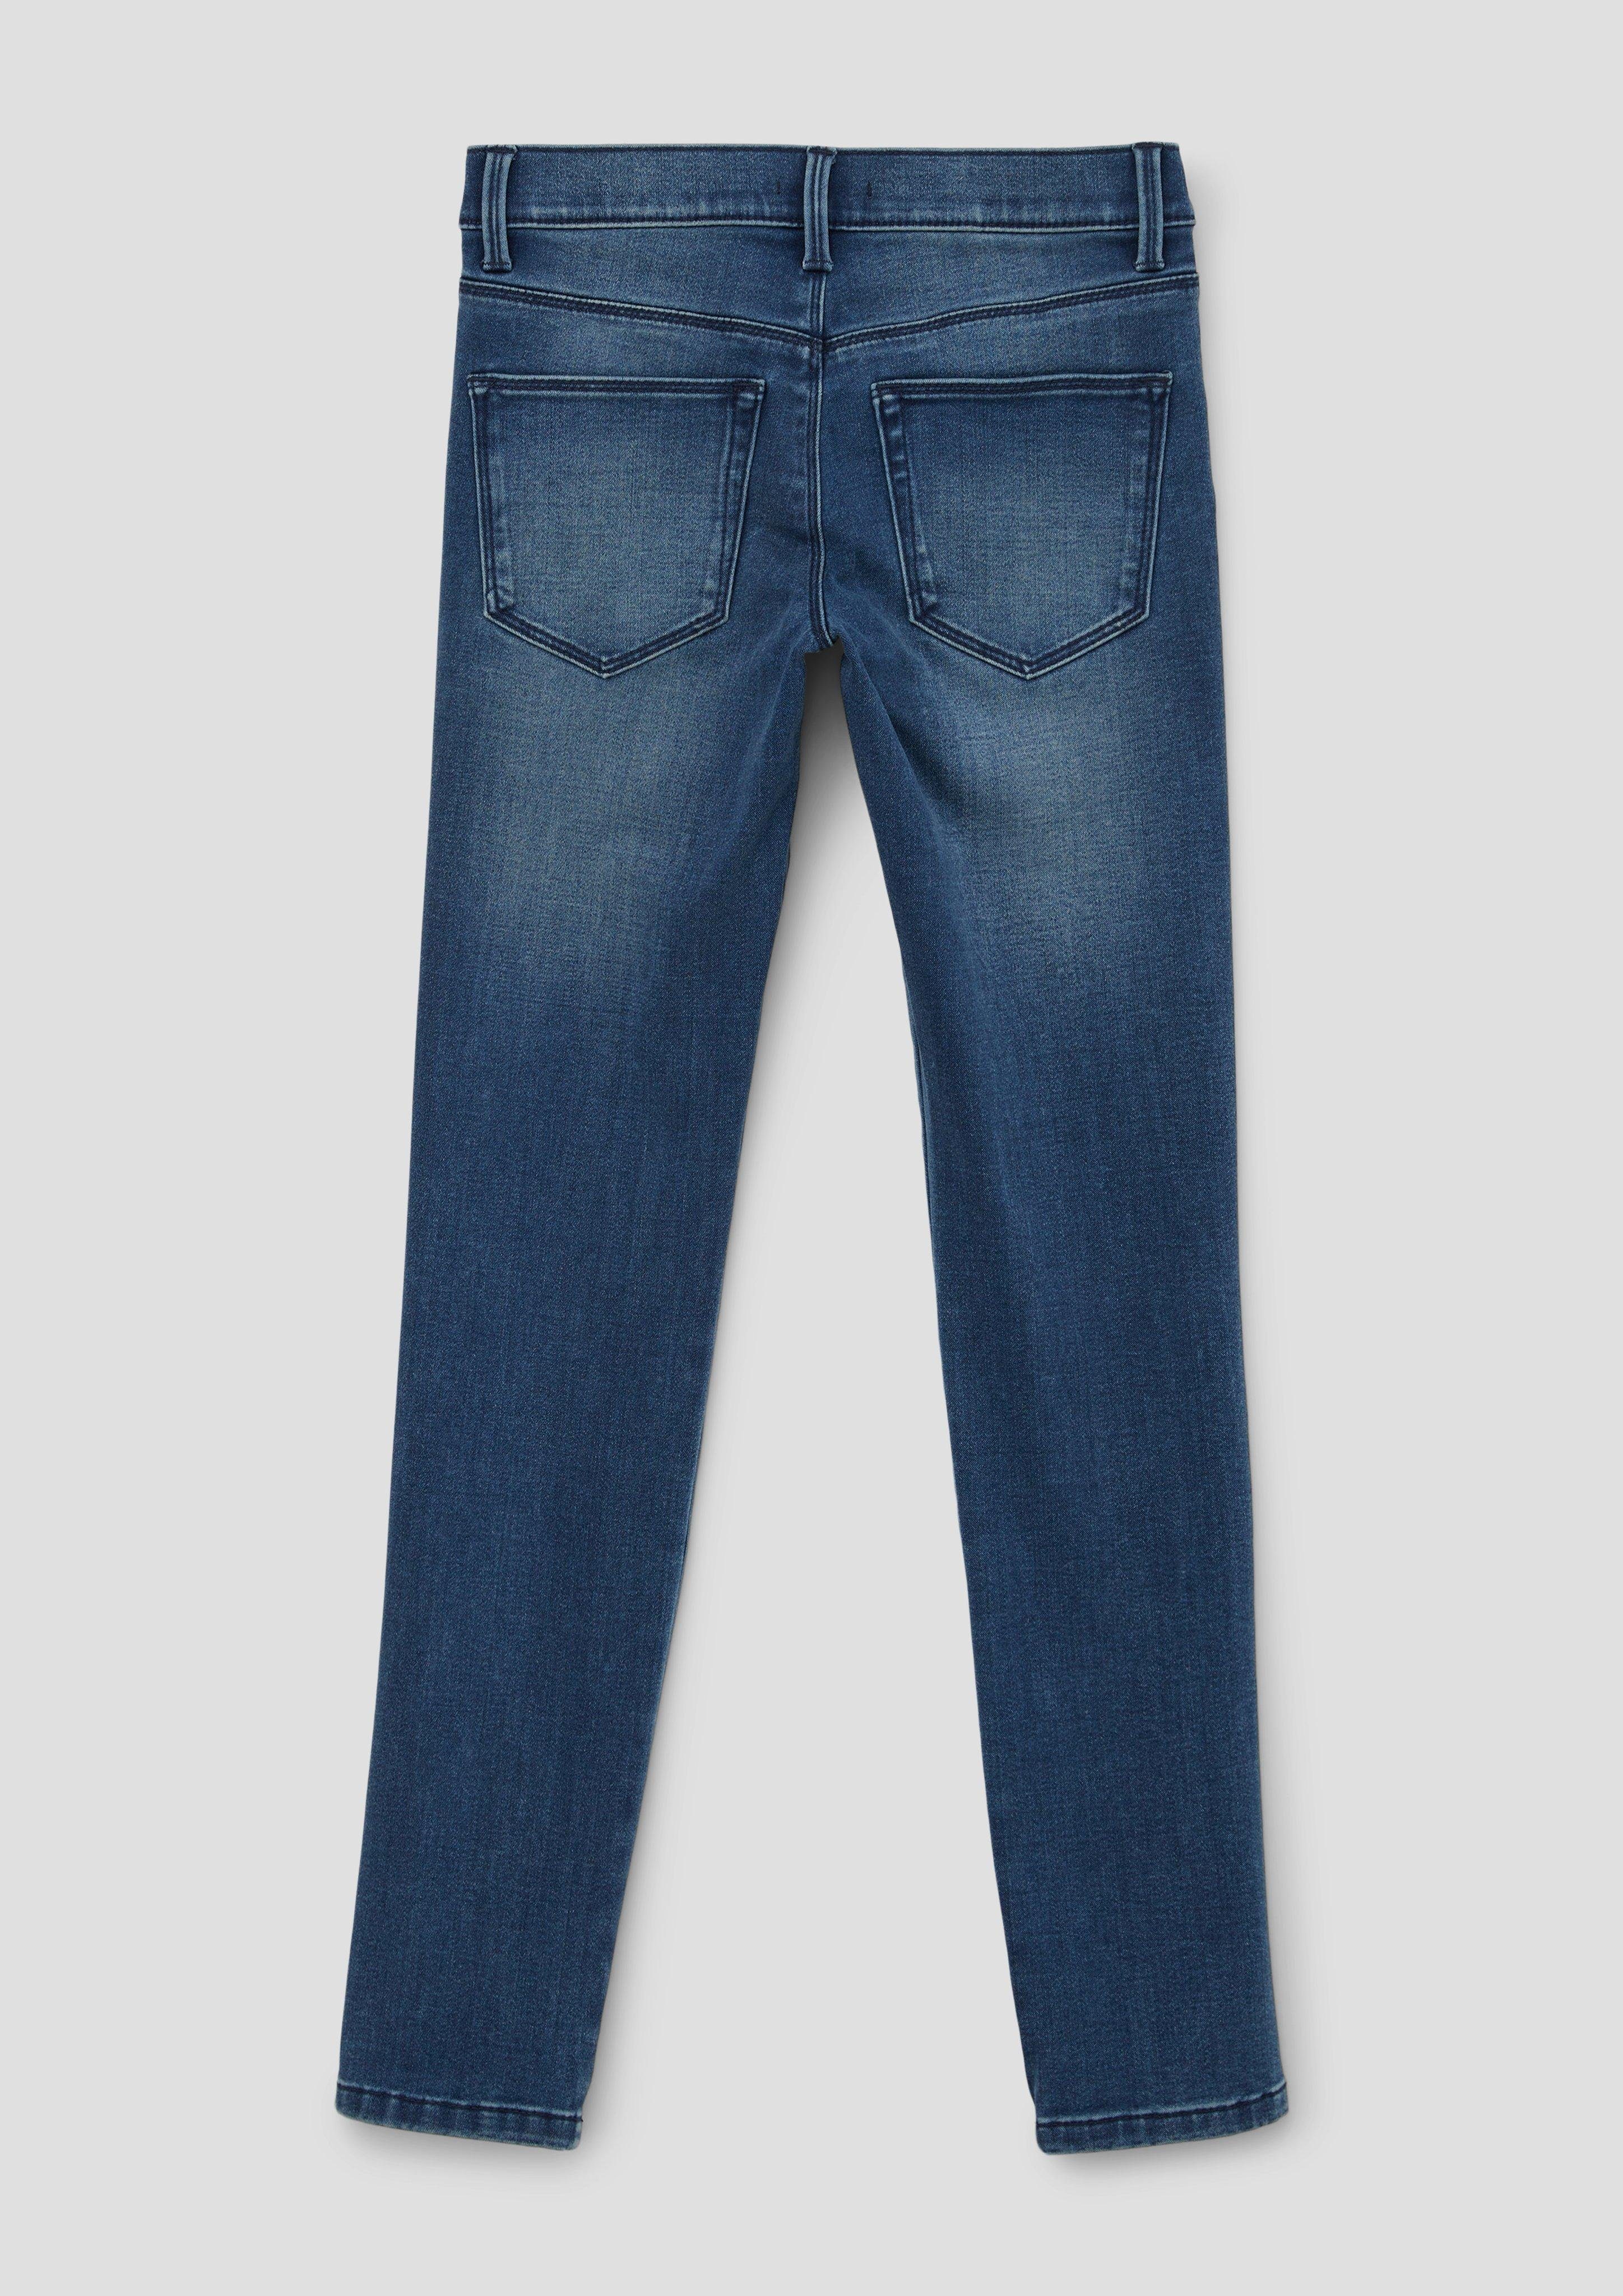 / Jeans s.Oliver Mid Regular / Stoffhose Junior Waschung Slim s.Oliver / Fit Suri Rise Leg